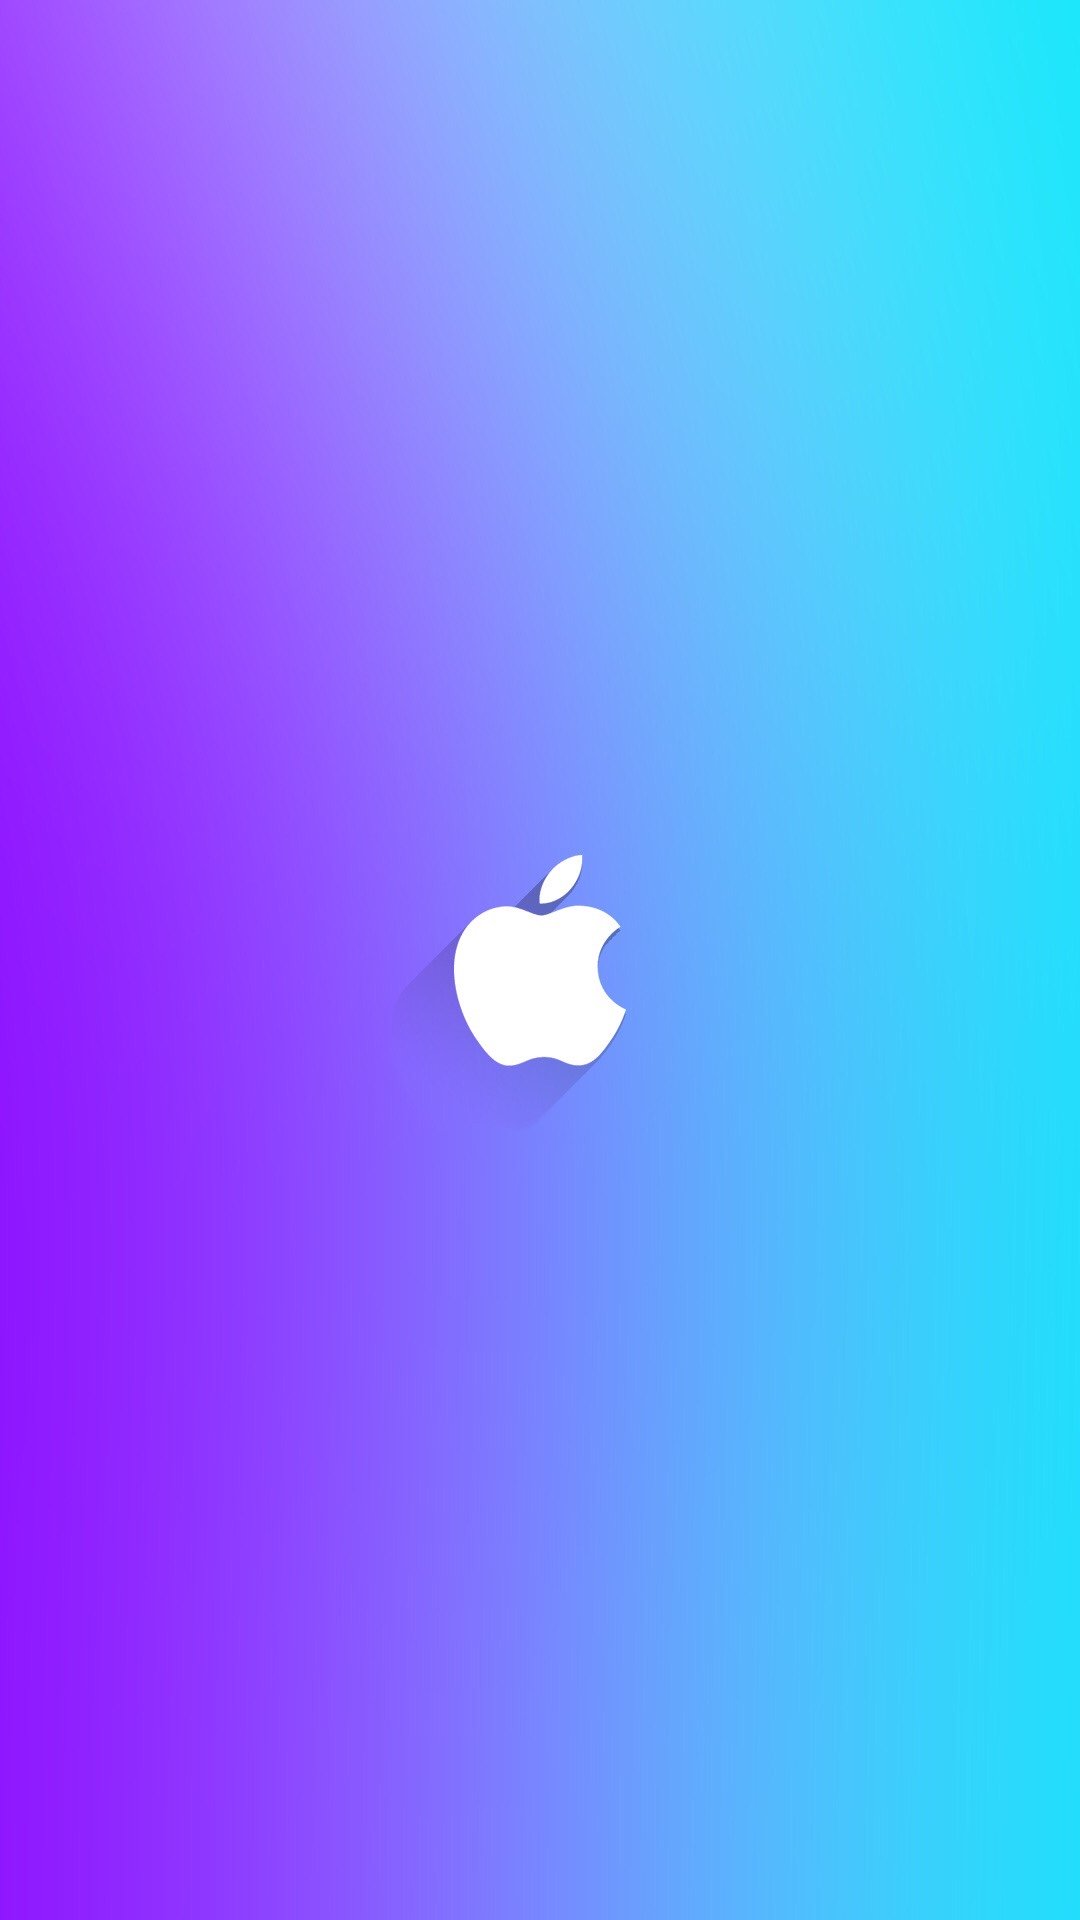 Aesthetic Apple Logo - 1080x1920 Wallpaper - teahub.io